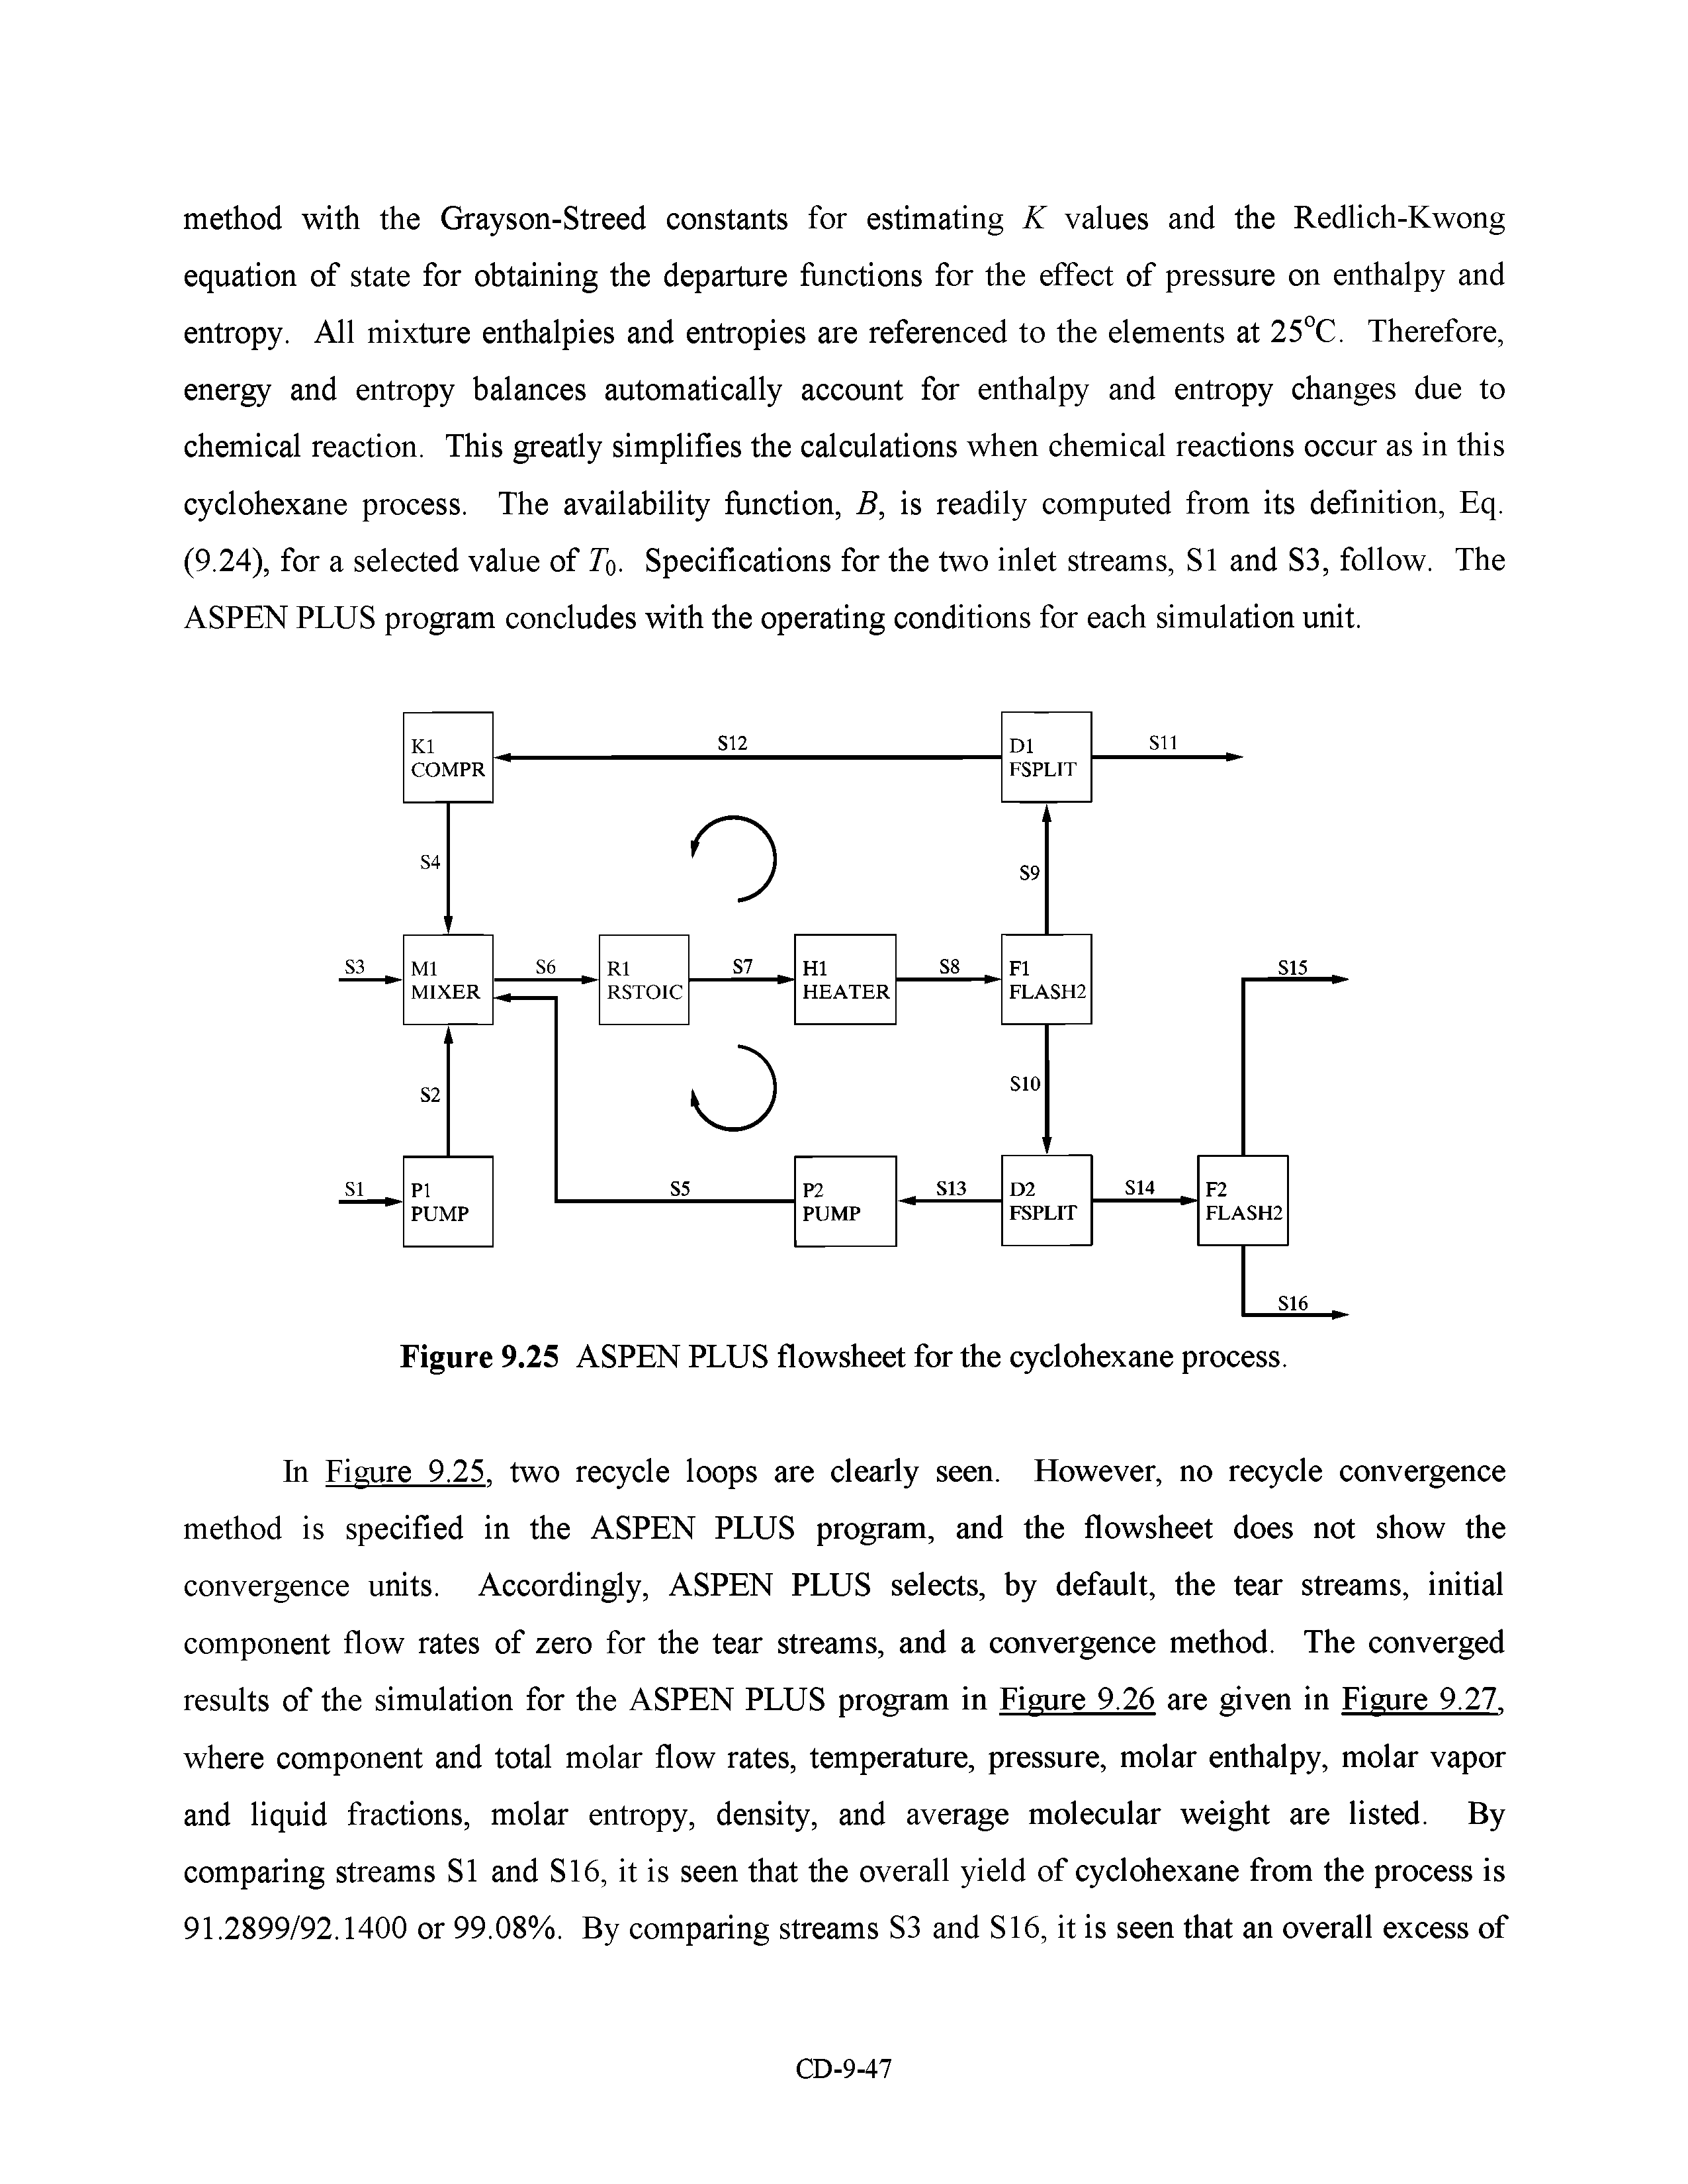 Figure 9.25 ASPEN PLUS flowsheet for the cyclohexane process.